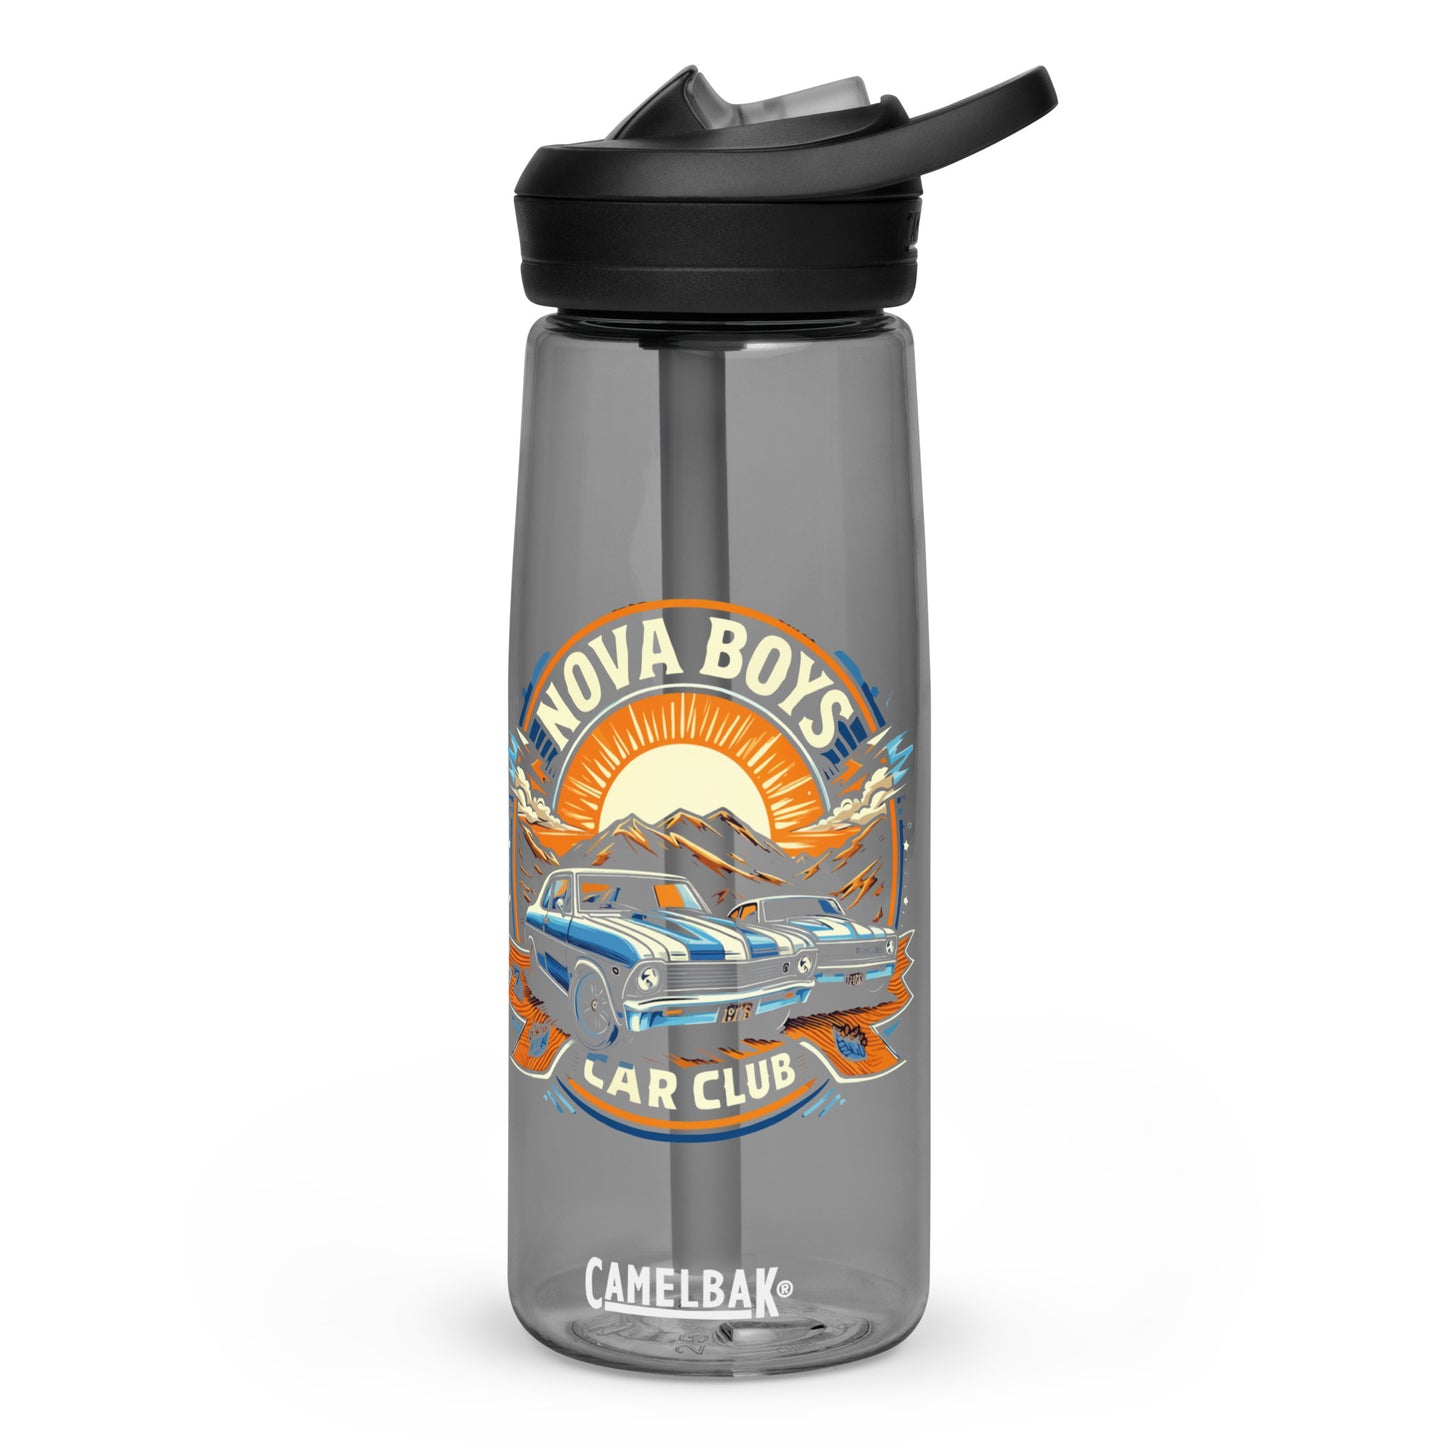 The Nova Boys Camelbak Sports Water Bottle - Y6faUV